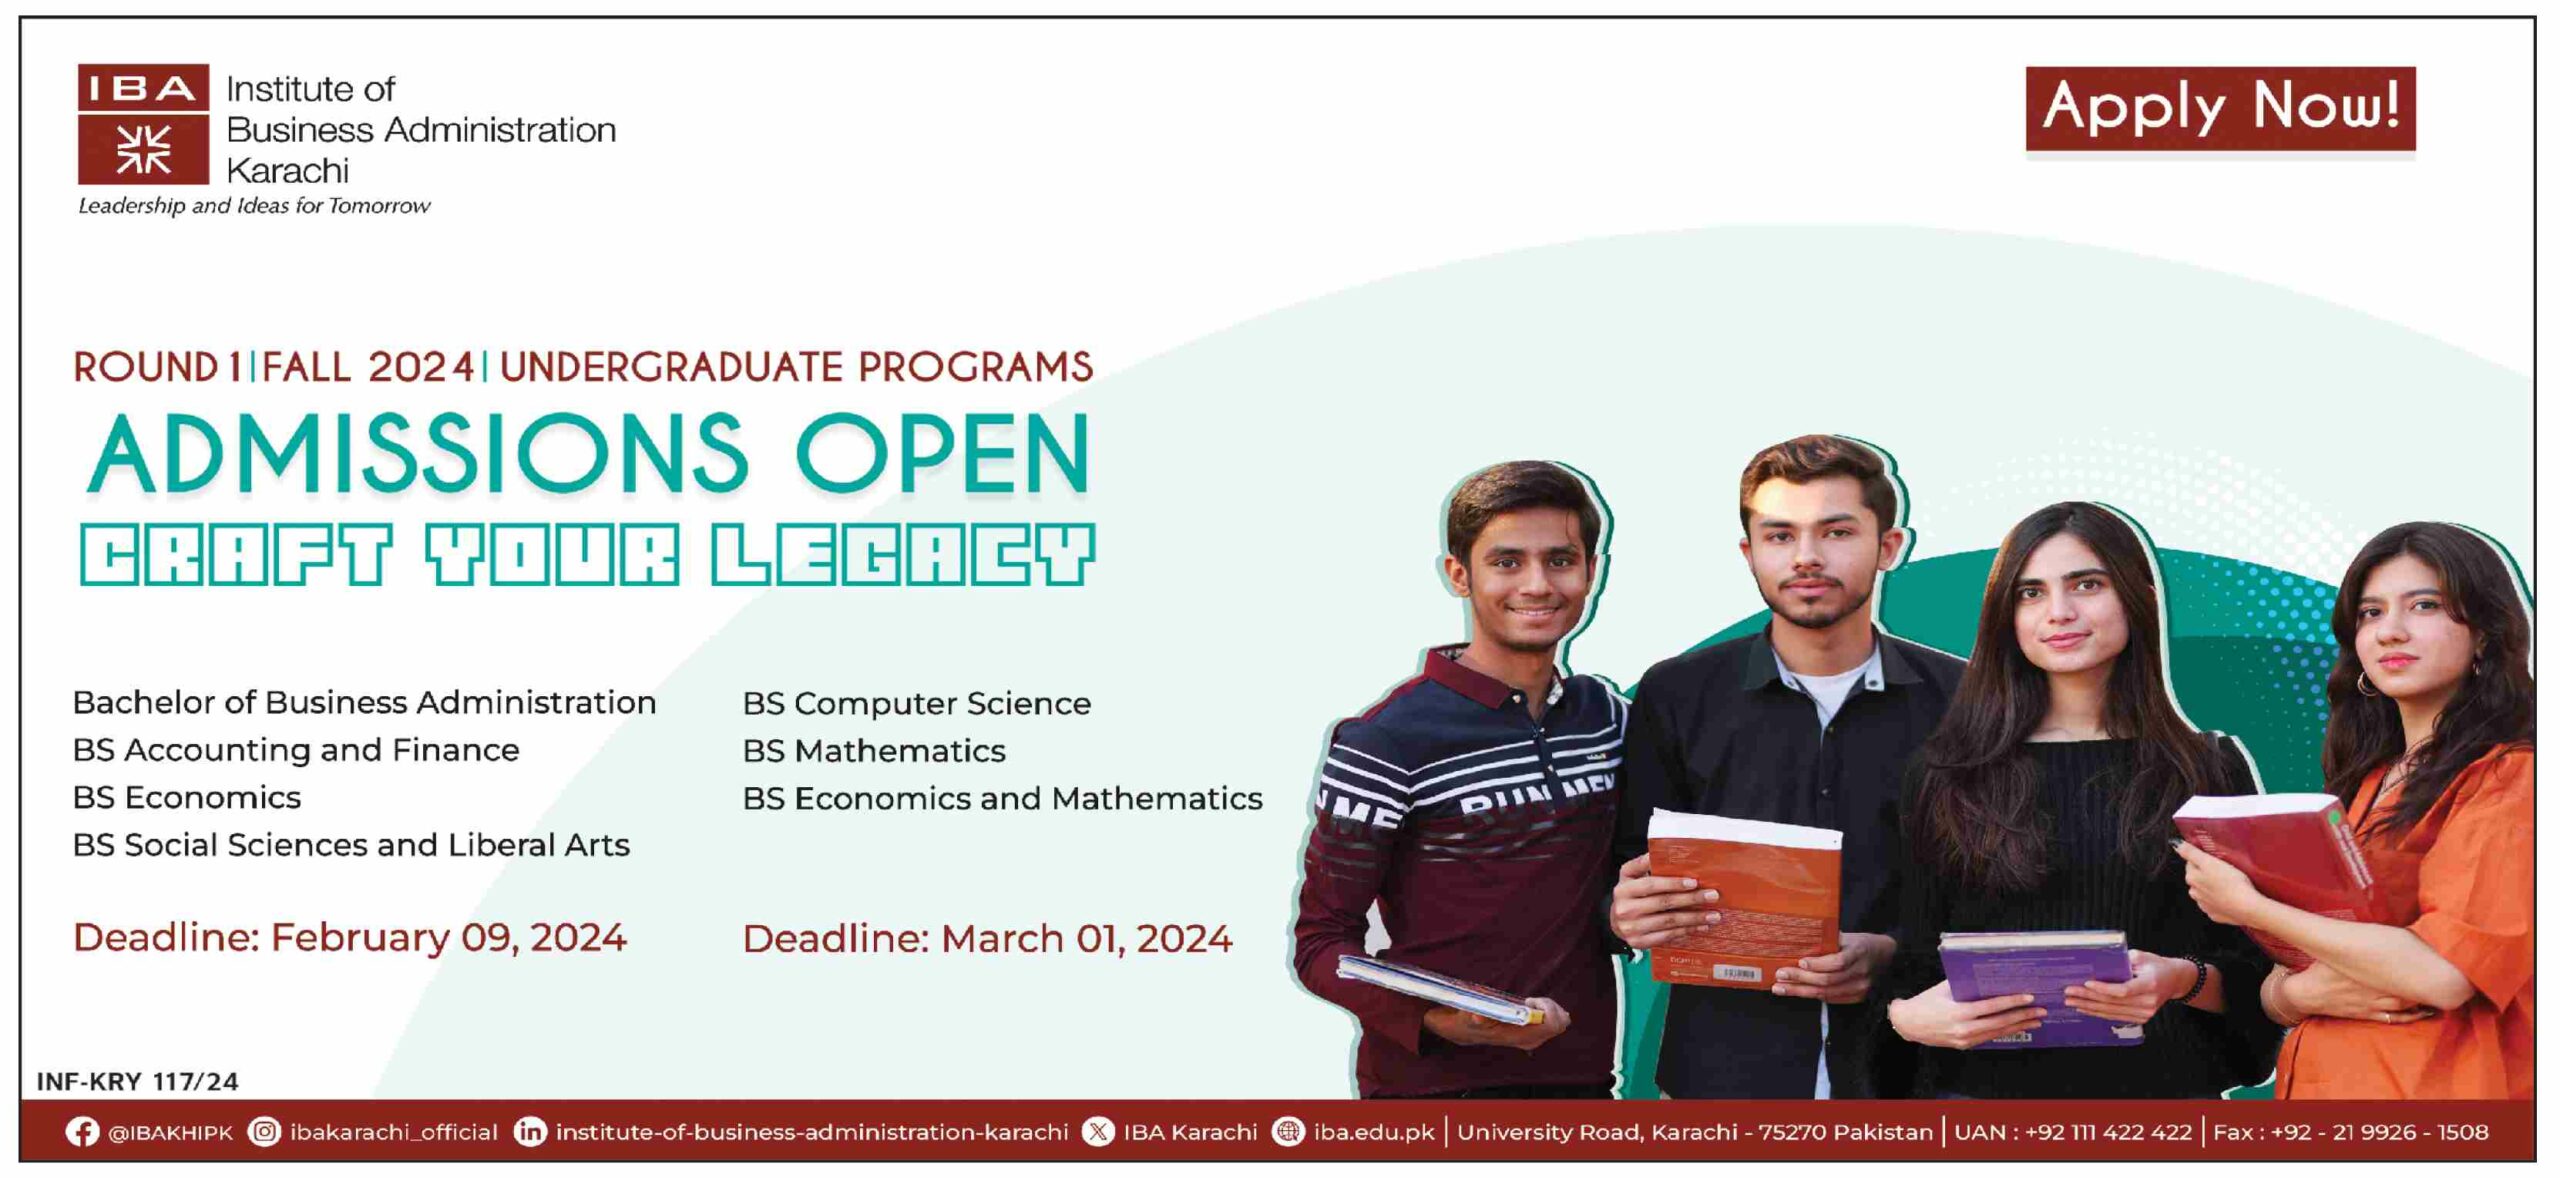 IBA Karachi Undergraduate Programs Admissions Open Fall 2024 Round 1